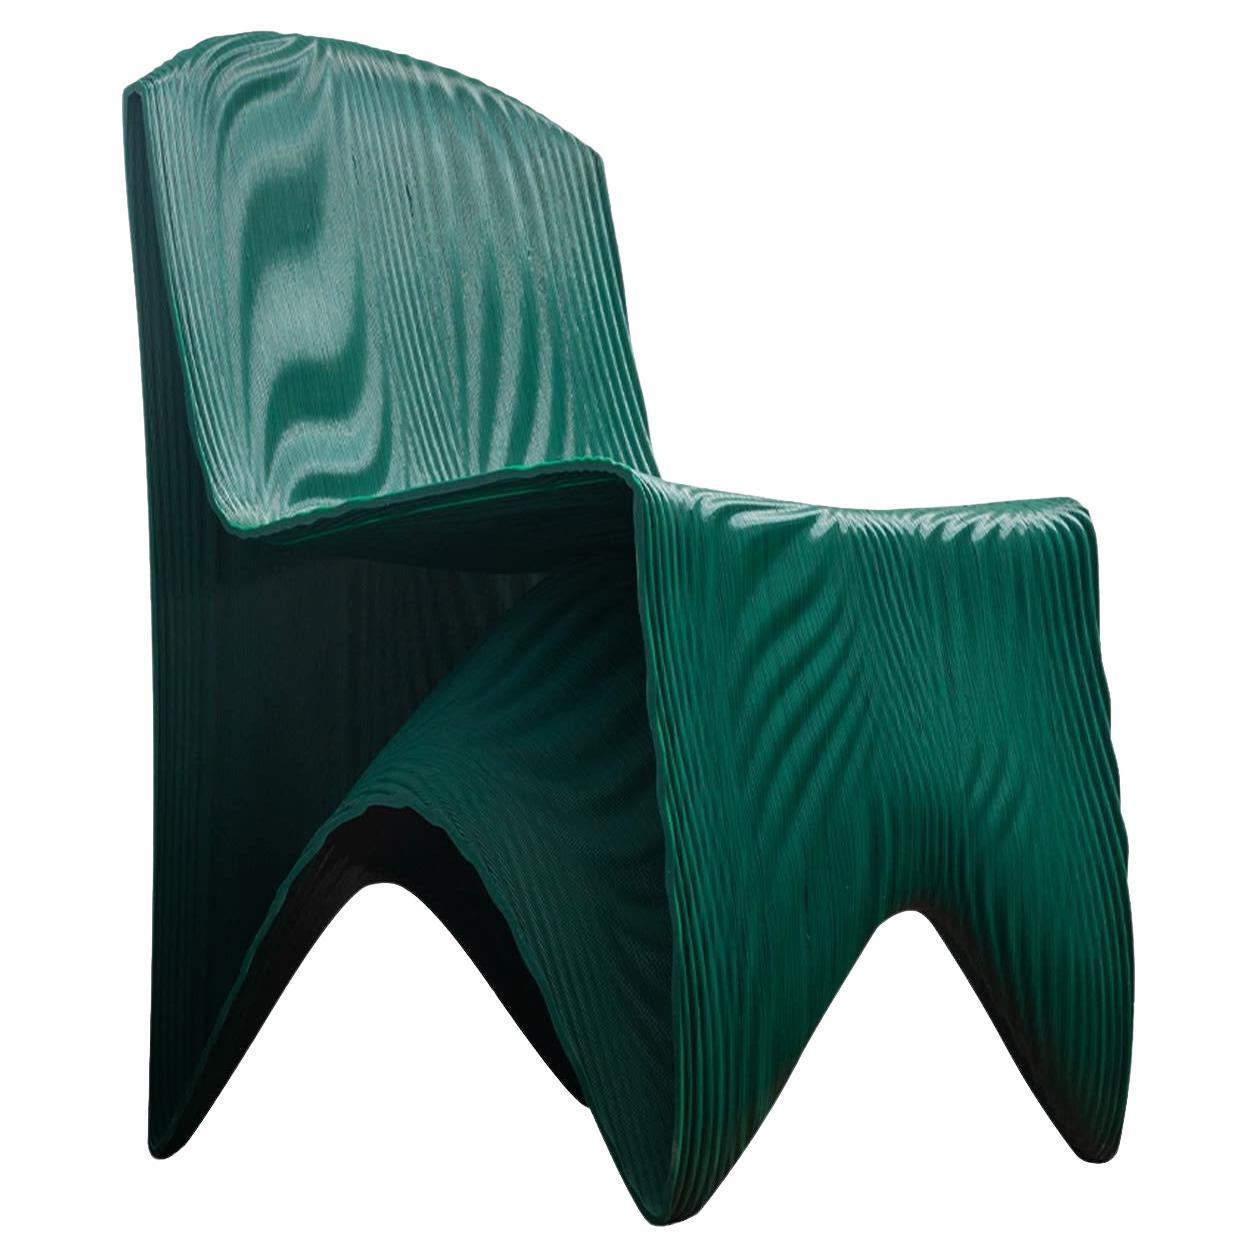 Santorini Green Chairs For Sale